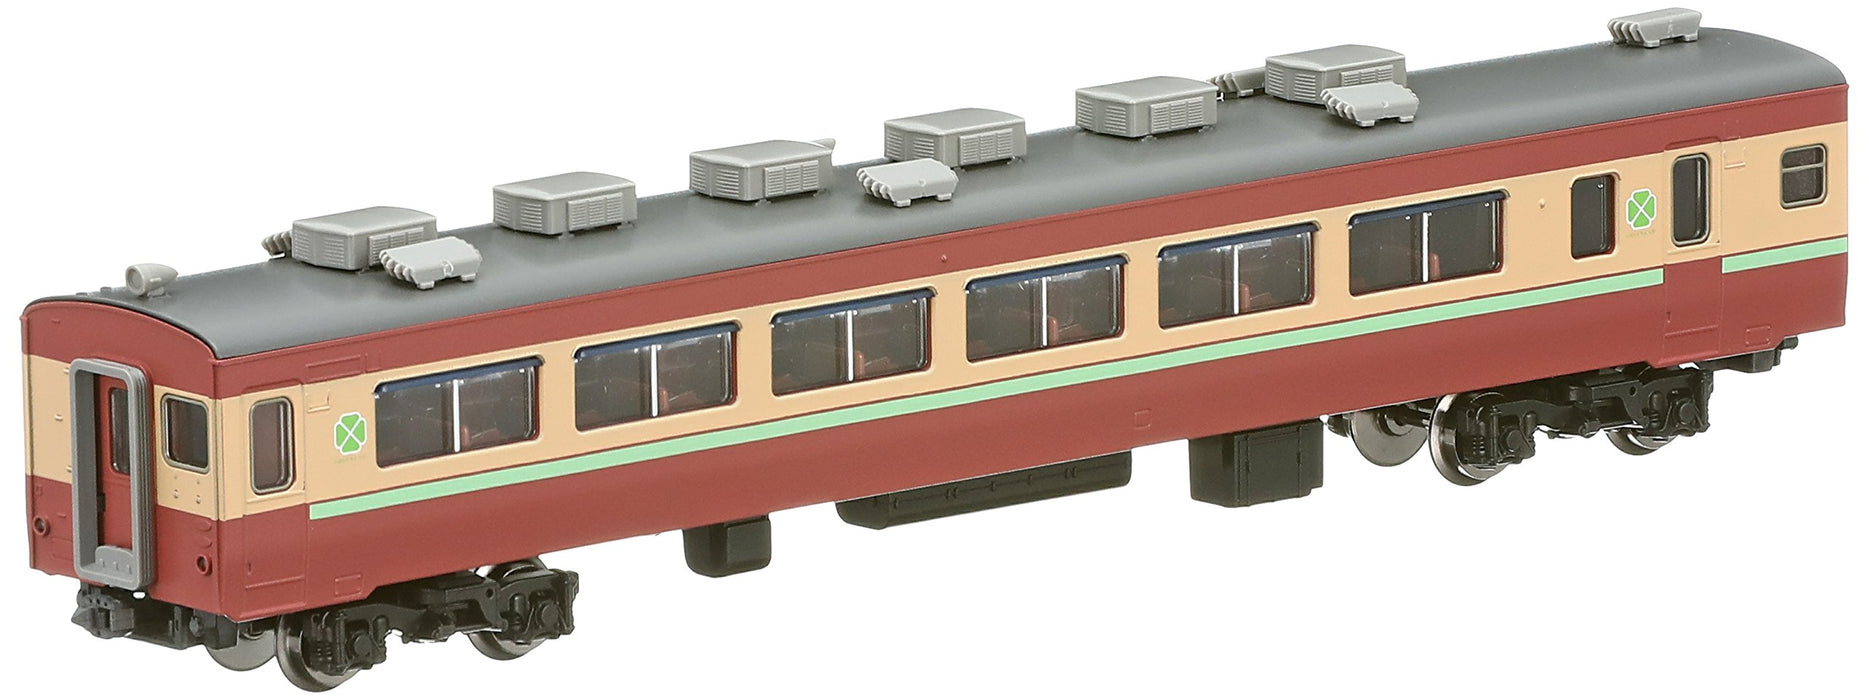 Tomytec Tomix N Gauge 455 Salo with Obi - 8949 Model Train for Railway